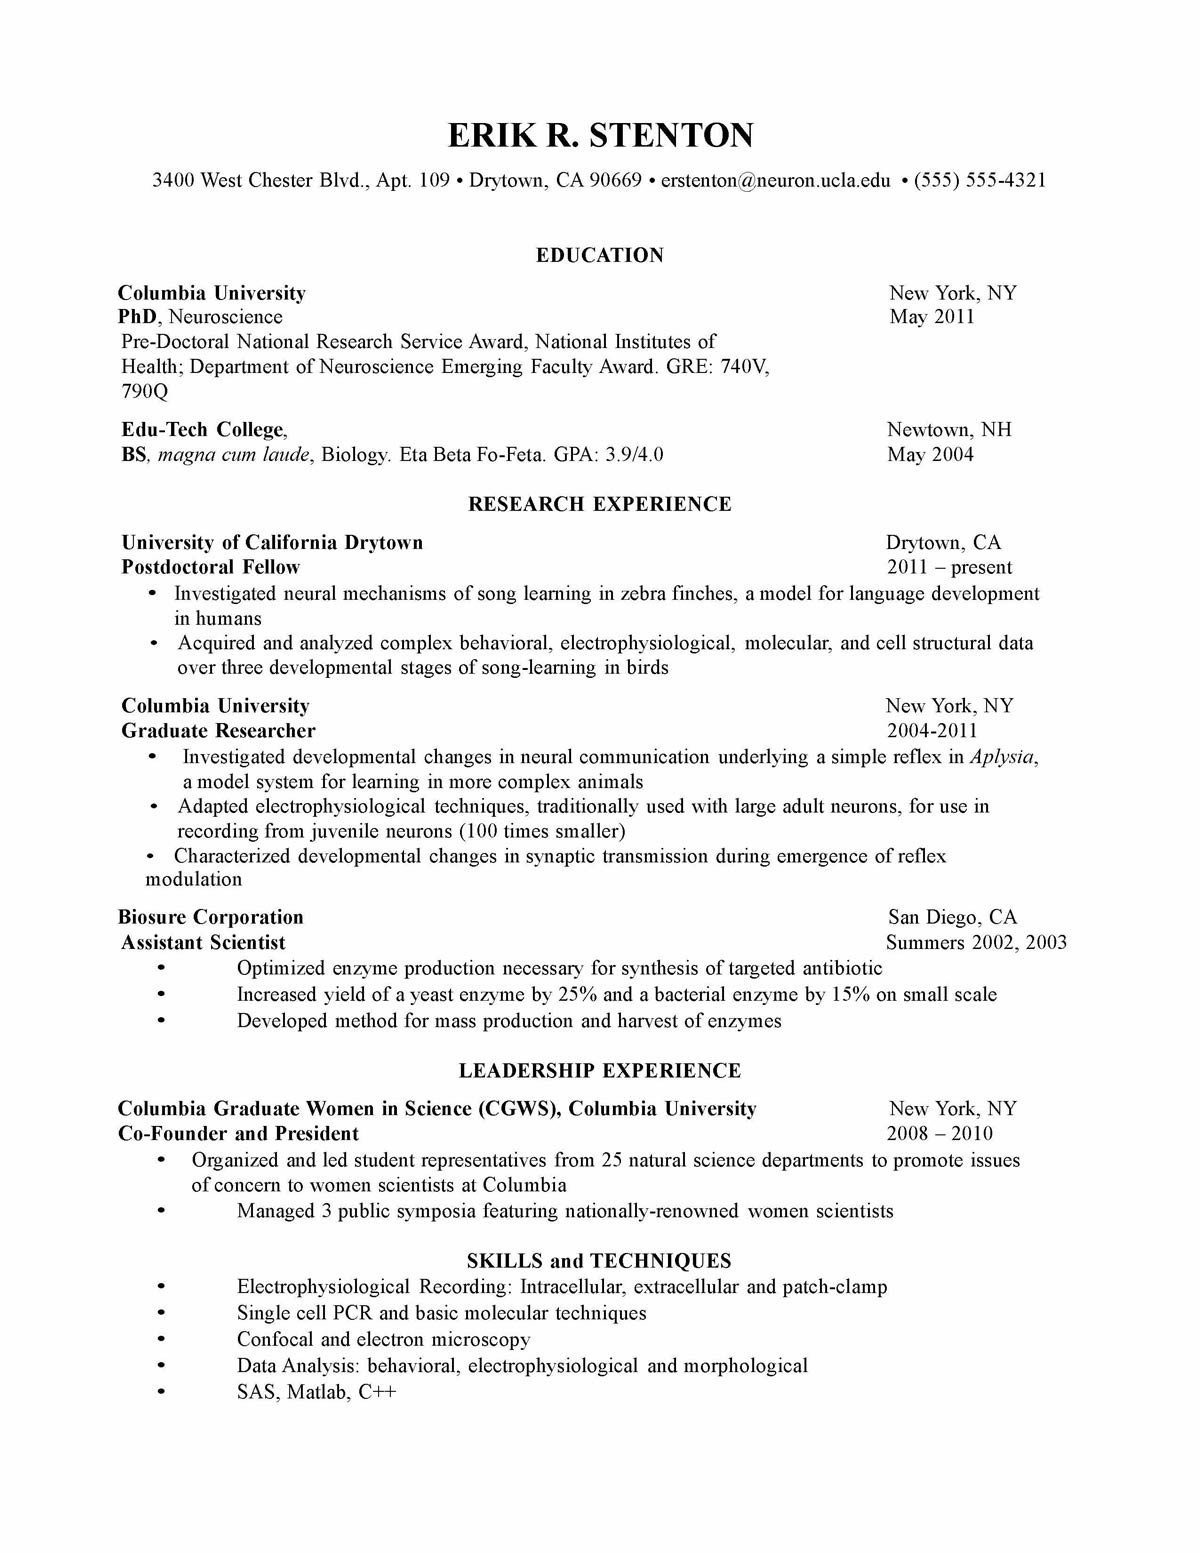 Resume for Applying to Graduate School Sample Applying Graduate School Resume Template – Lawwustl.web.fc2.com